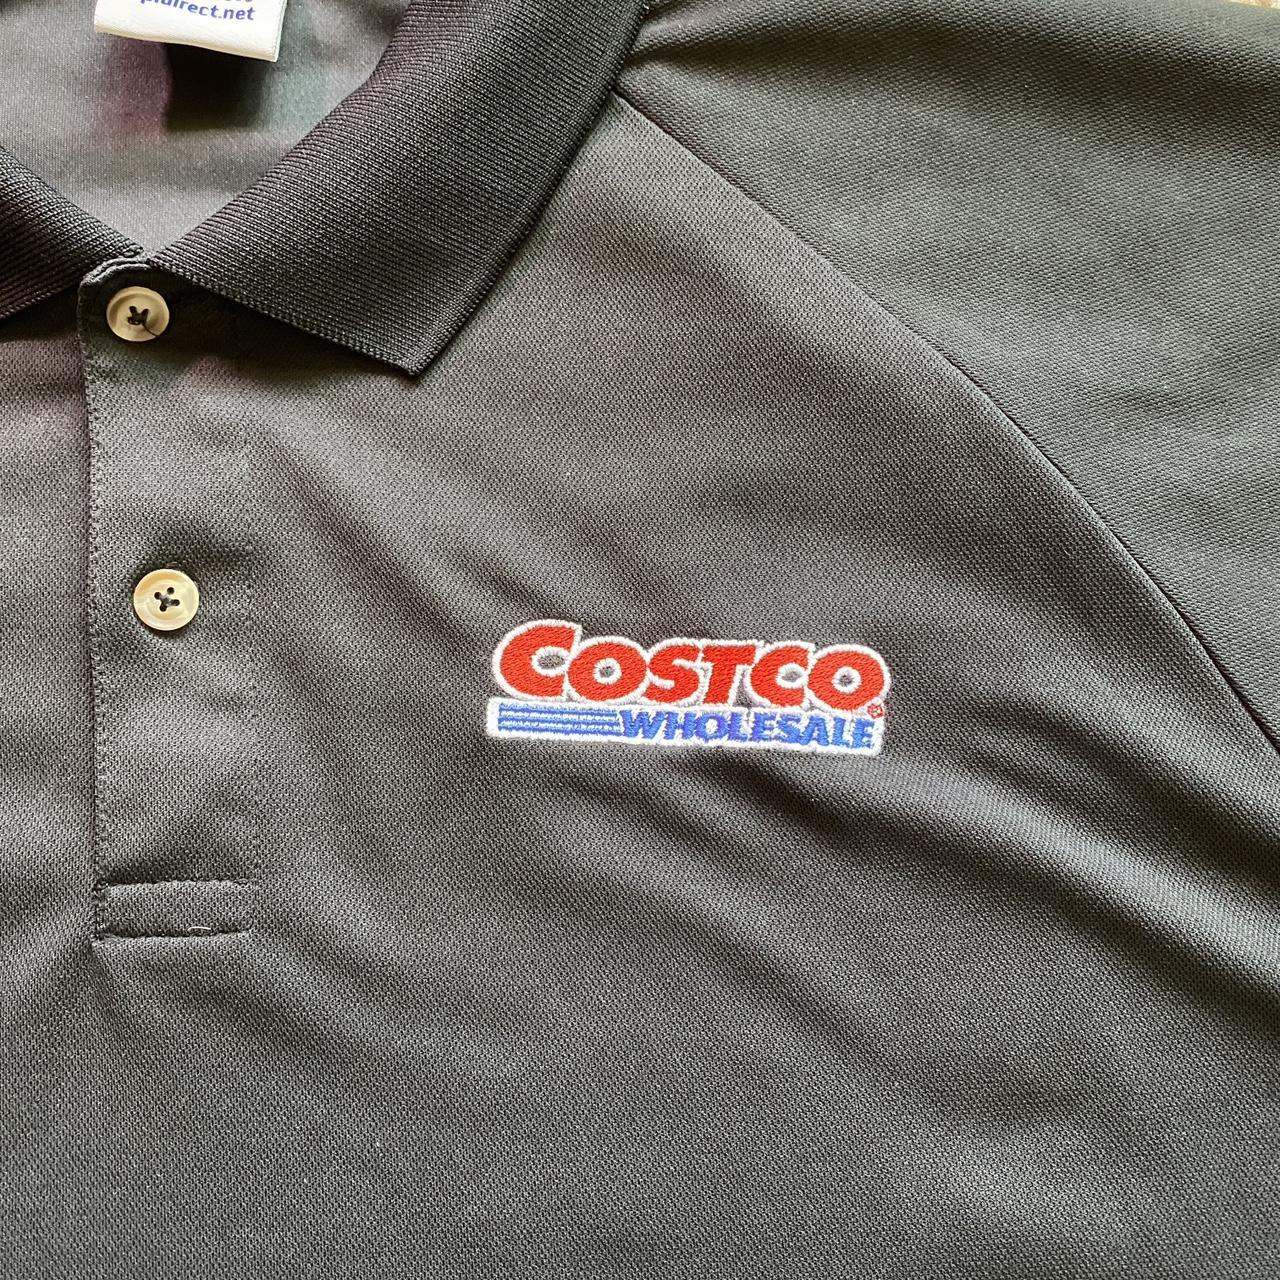 Costco Men's Black Polo-shirts (2)